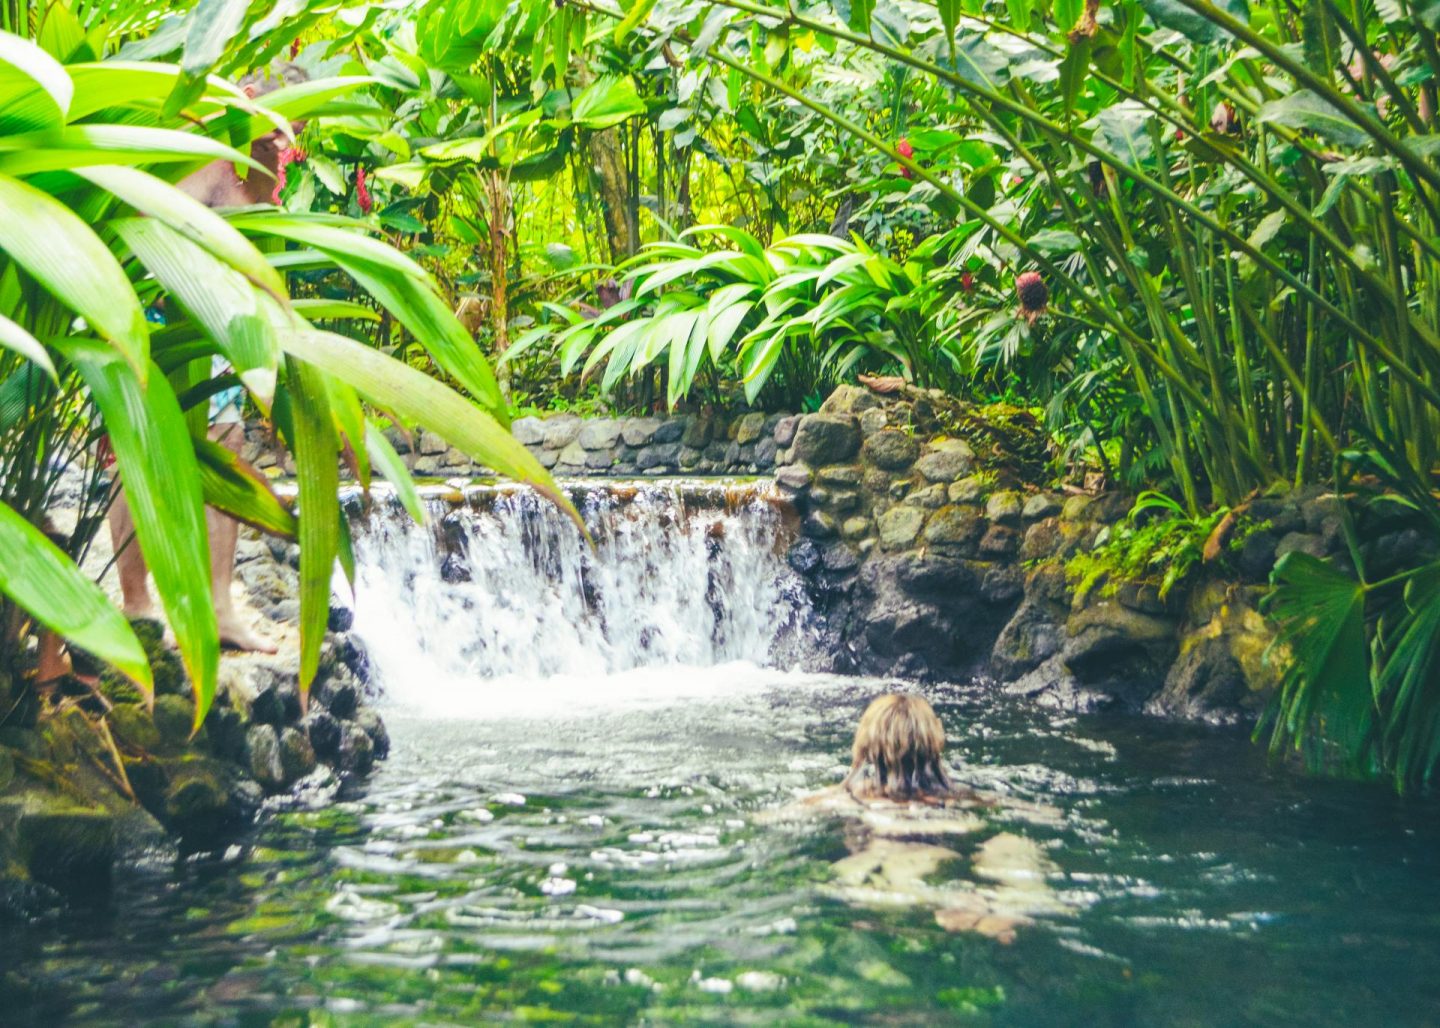 Travel guide to Costa Rica | Pura Vida and hot springs in Costa Rica